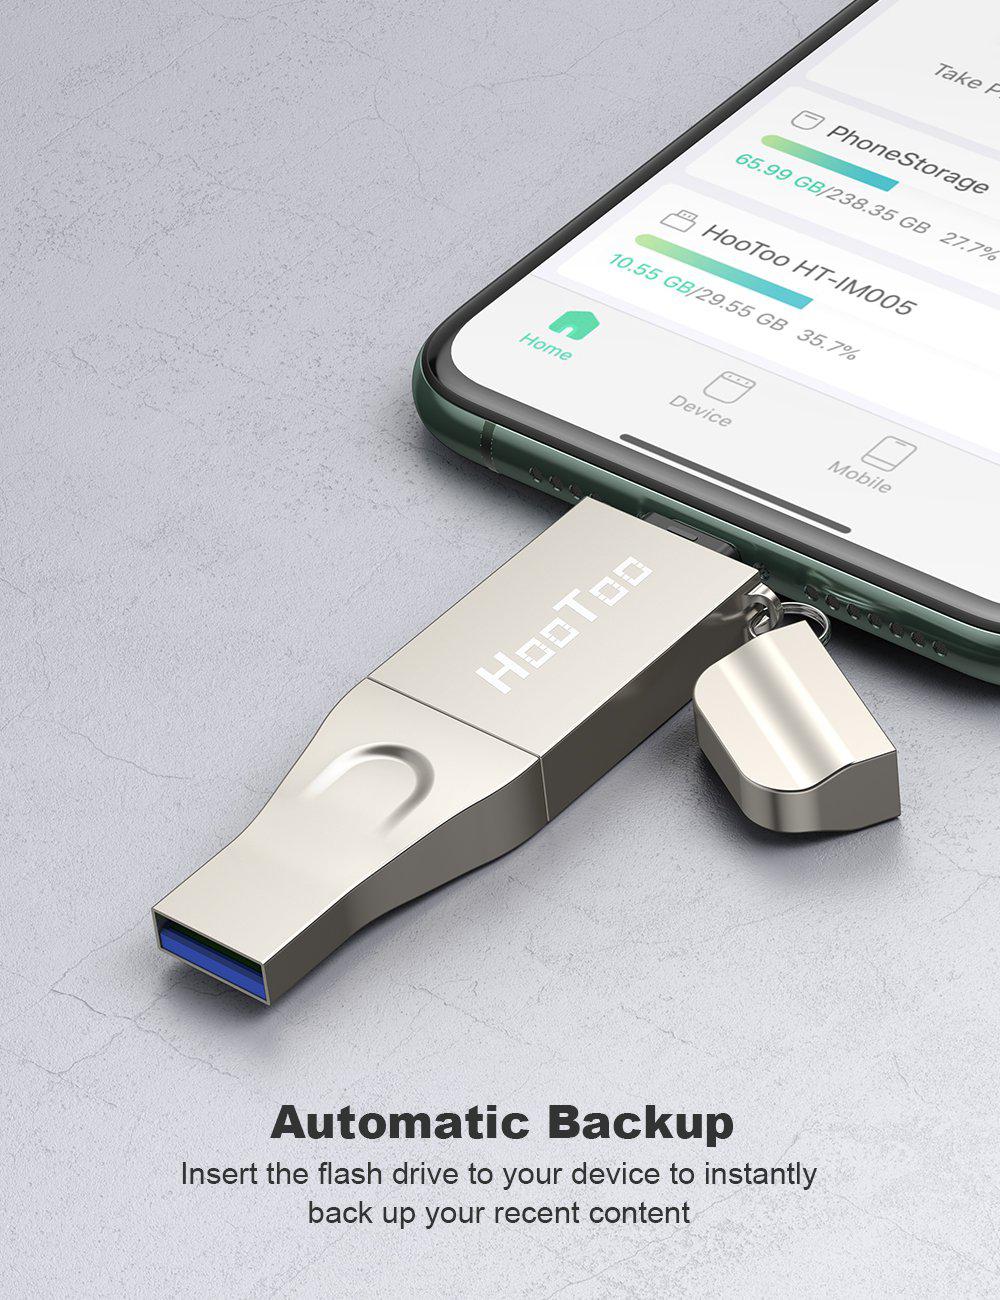 HooToo Flash Drive 3 in 1 Drive, USB 3.1 Memory Backup Stick